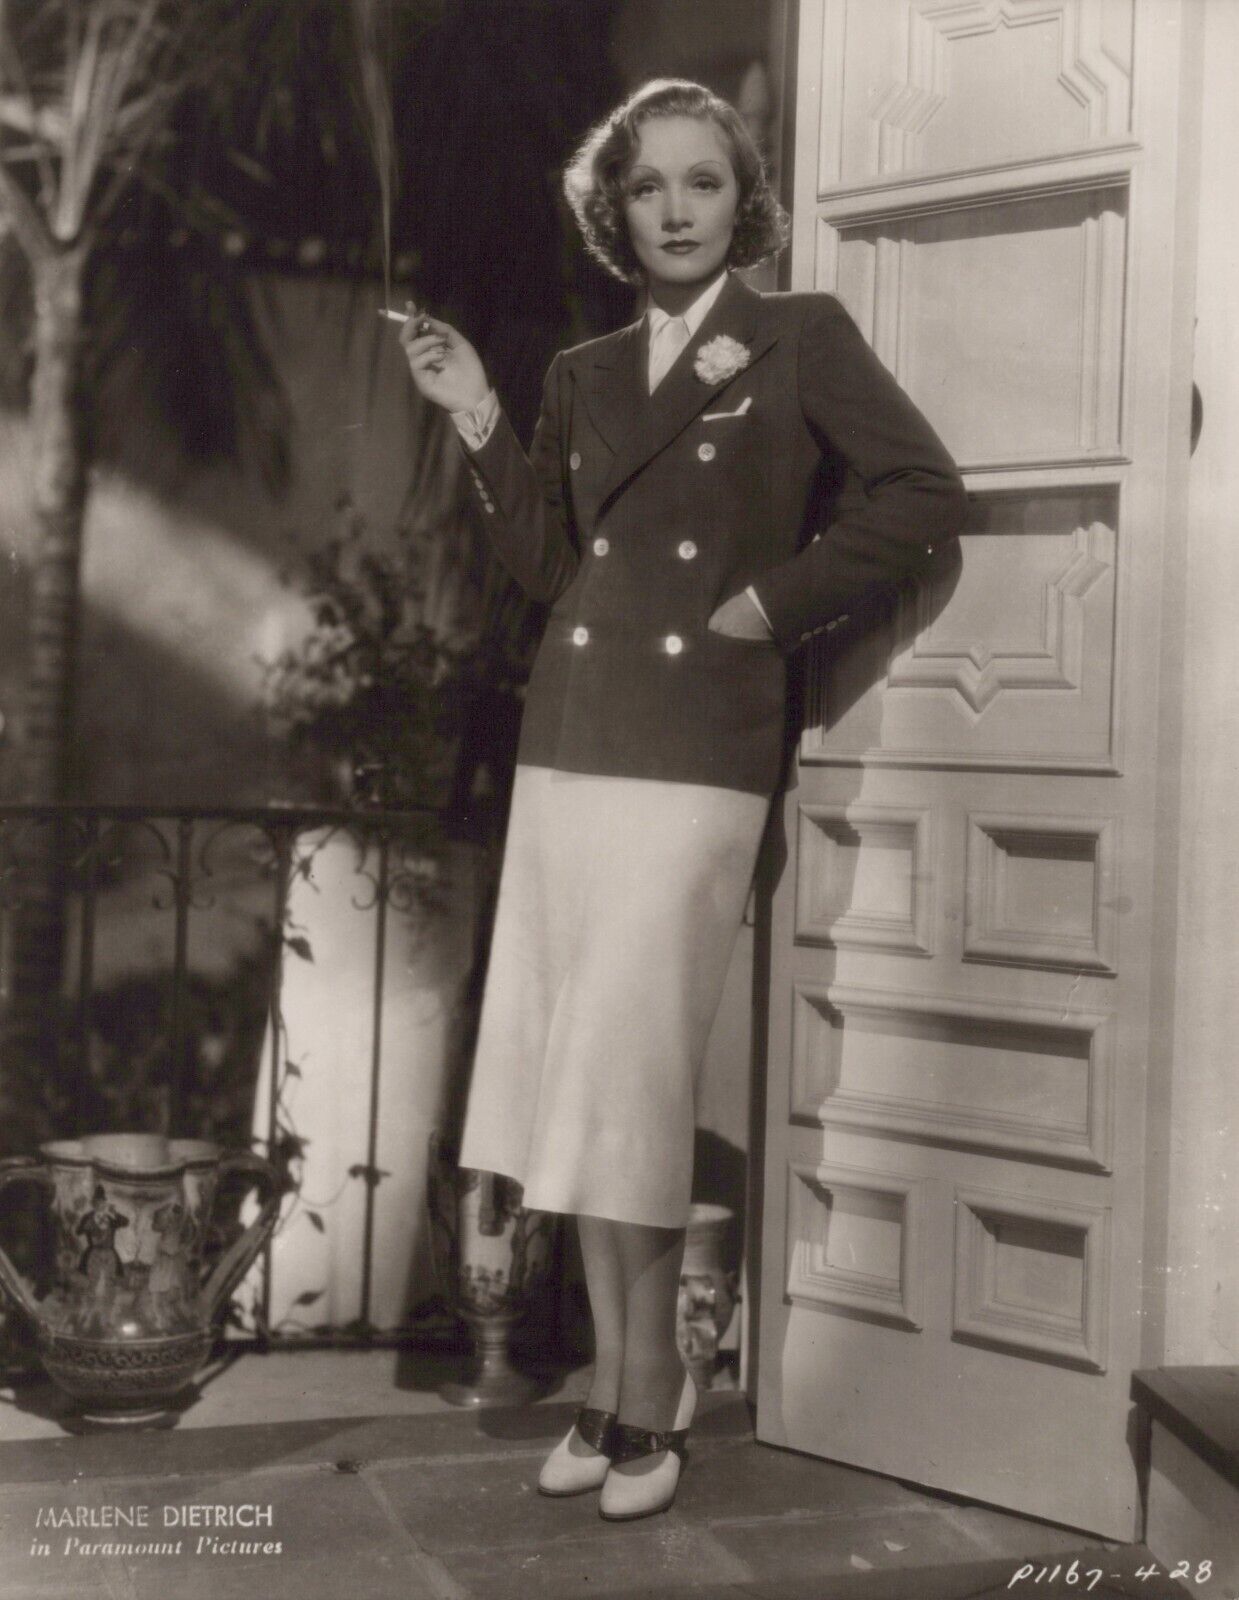 HOLLYWOOD BEAUTY MARLENE DIETRICH STYLISH POSE STUNNING PORTRAIT 1940s Photo C21